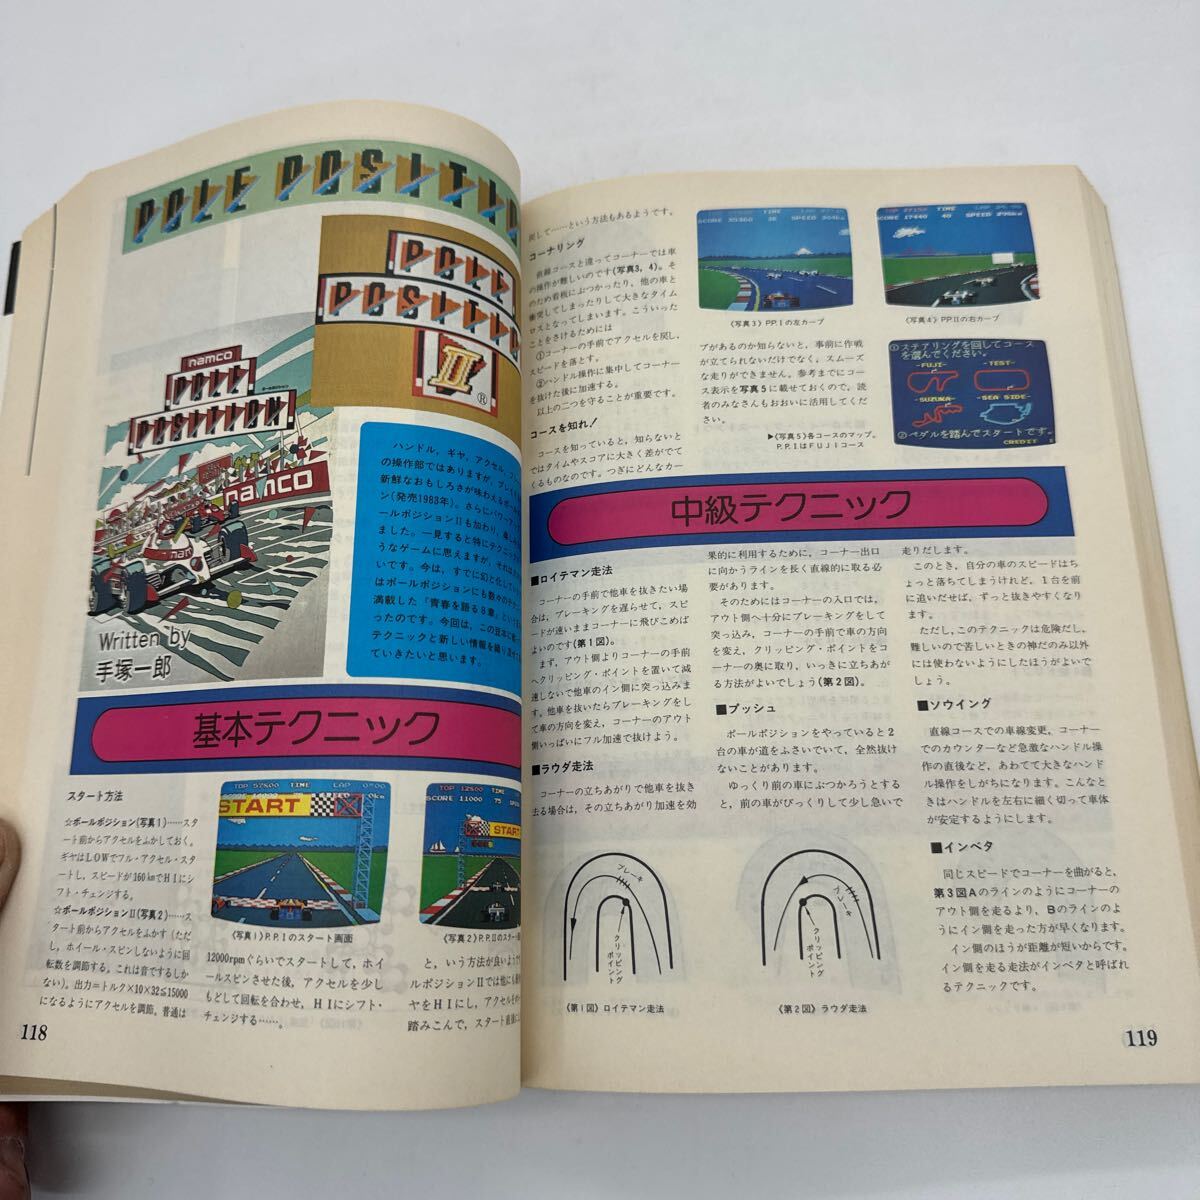 namco шедевр игра сборник microcomputer отдельный выпуск Namco Mu jiam microcomputer BASIC журнал отдельный выпуск Namco игра. все NAMCO